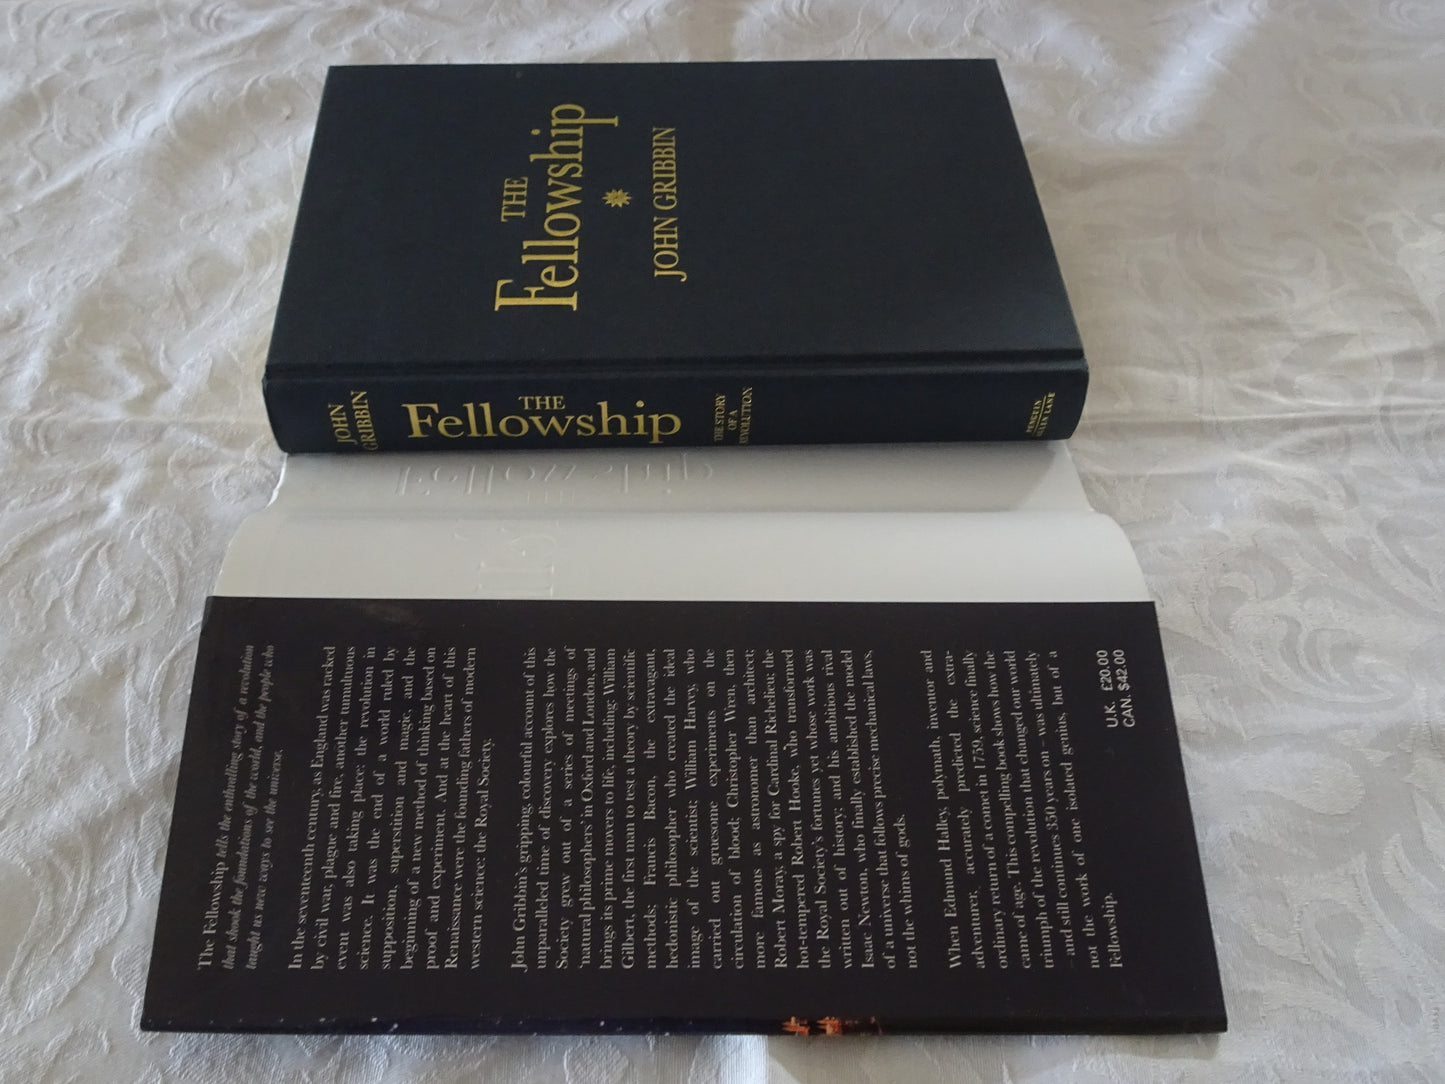 The Fellowship by John Gribbin